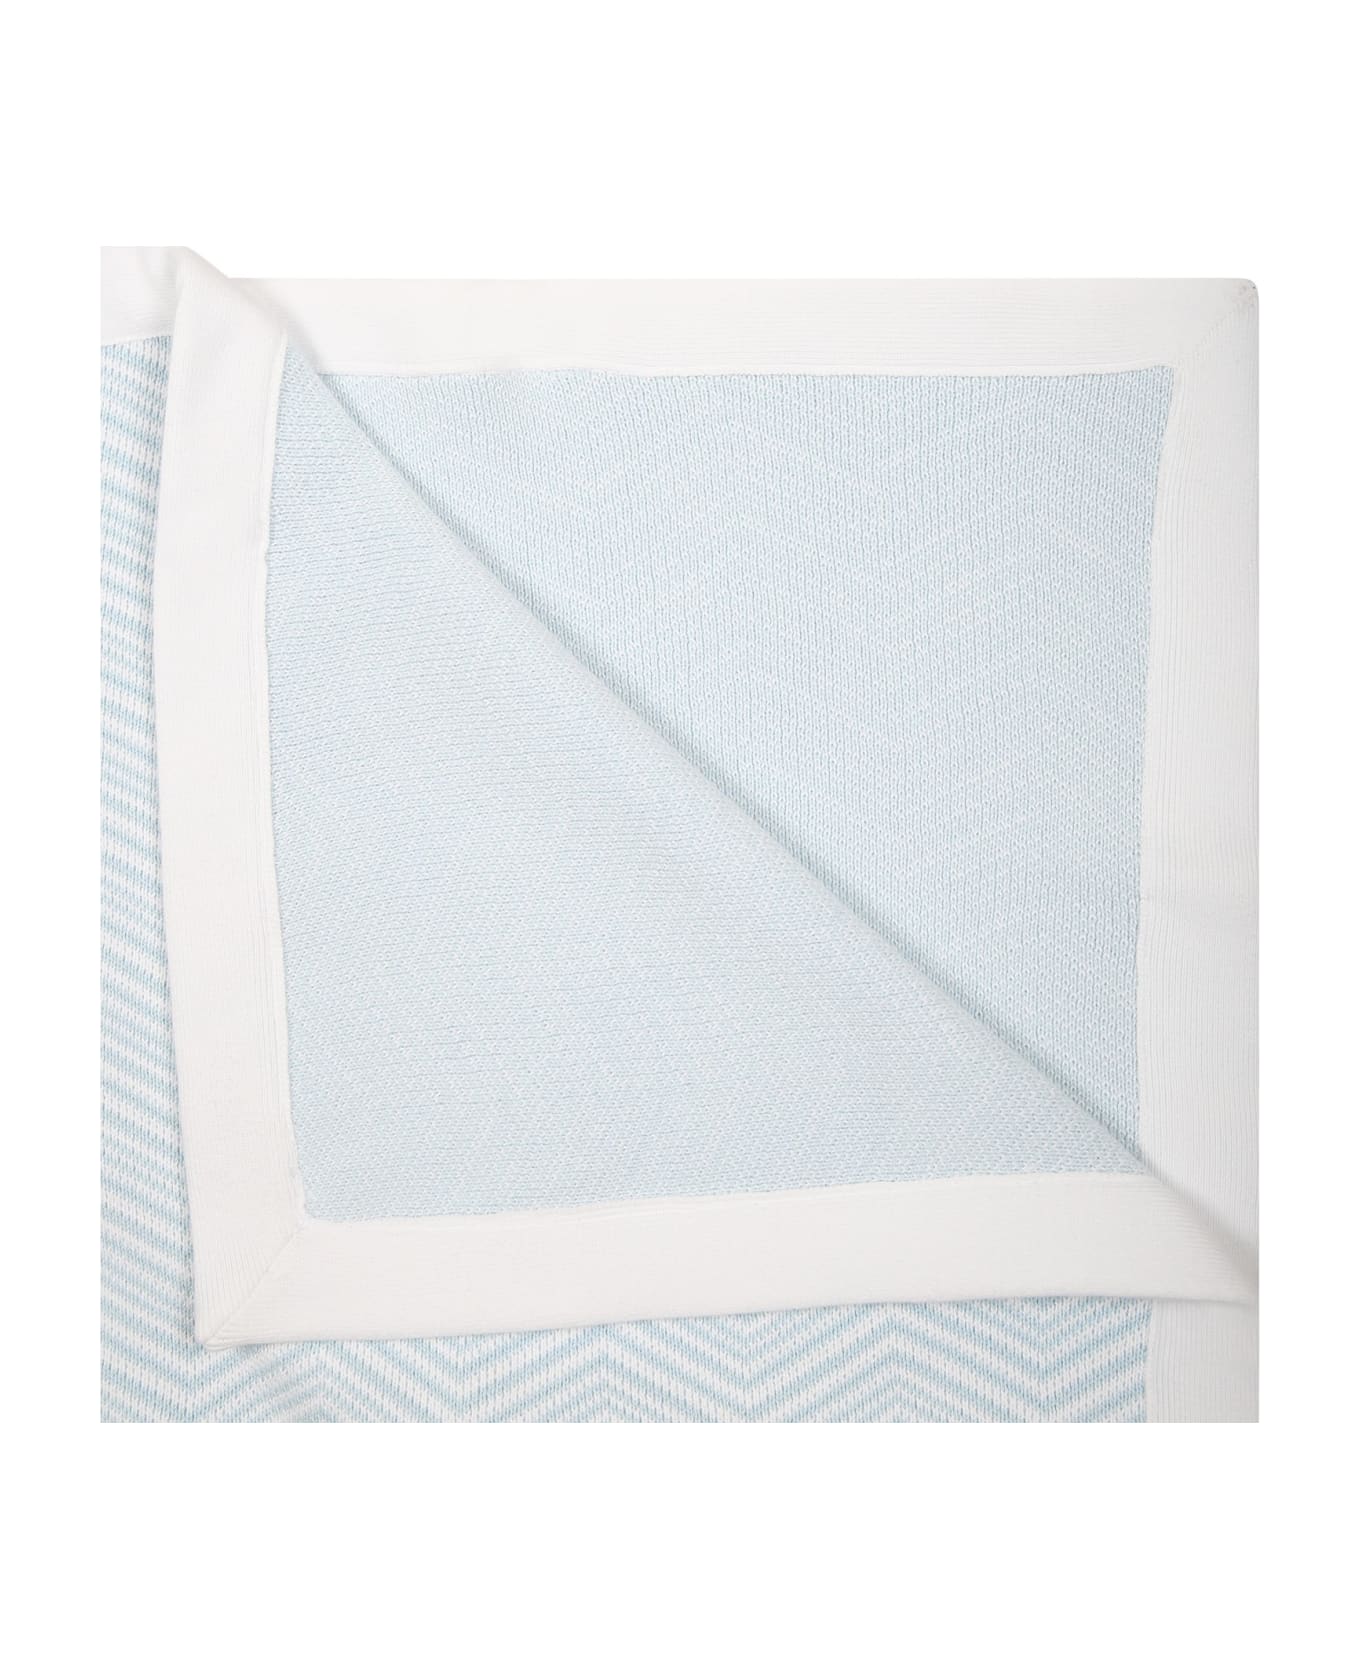 Missoni Light Blue Blanket For Baby Boy With Chevron Pattern - Light Blue